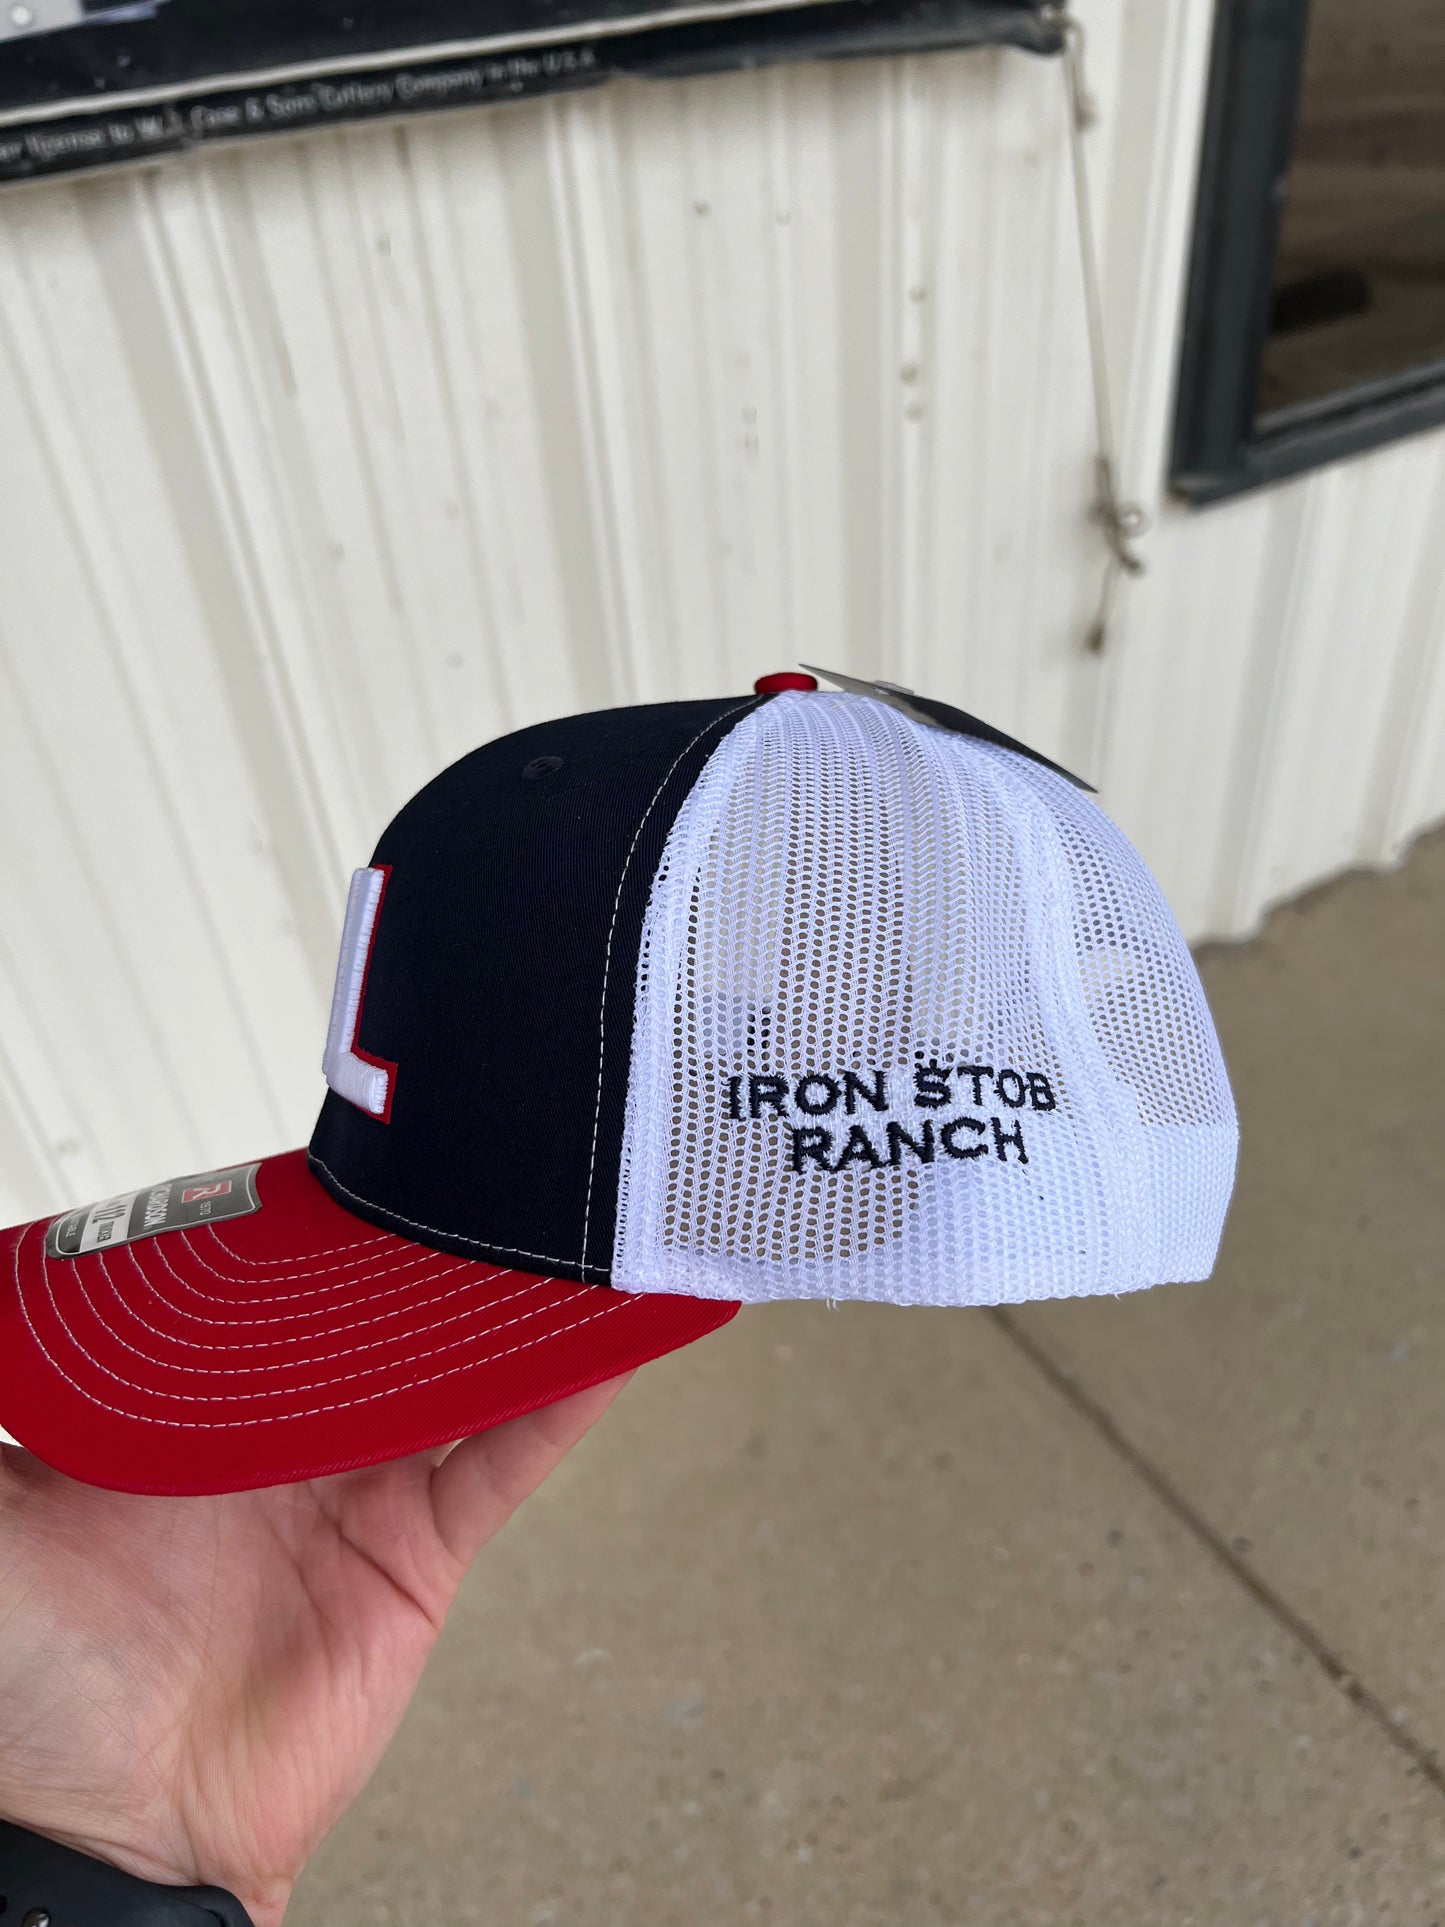 7L Iron Stob Ranch Caps